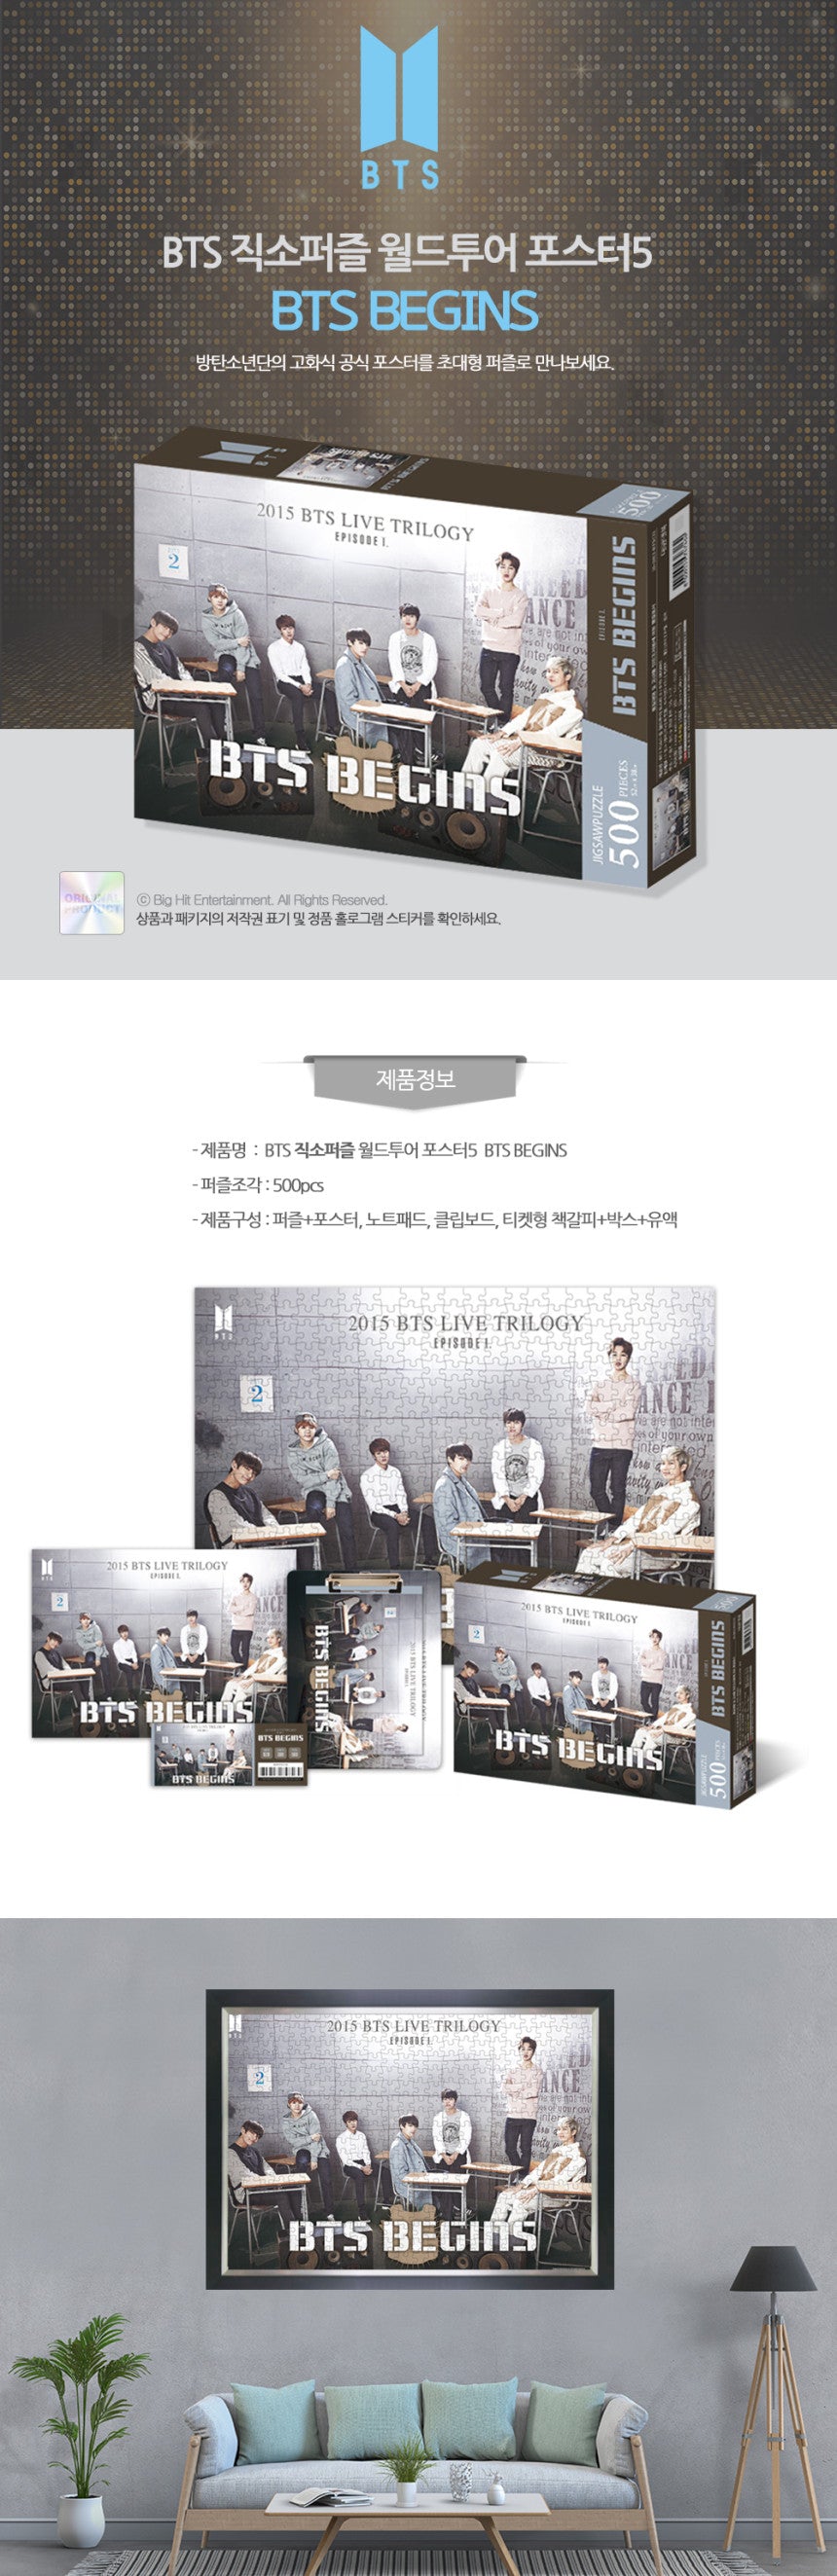 BTS Begins Jigsaw Puzzle 500pcs World Tour Poster 5